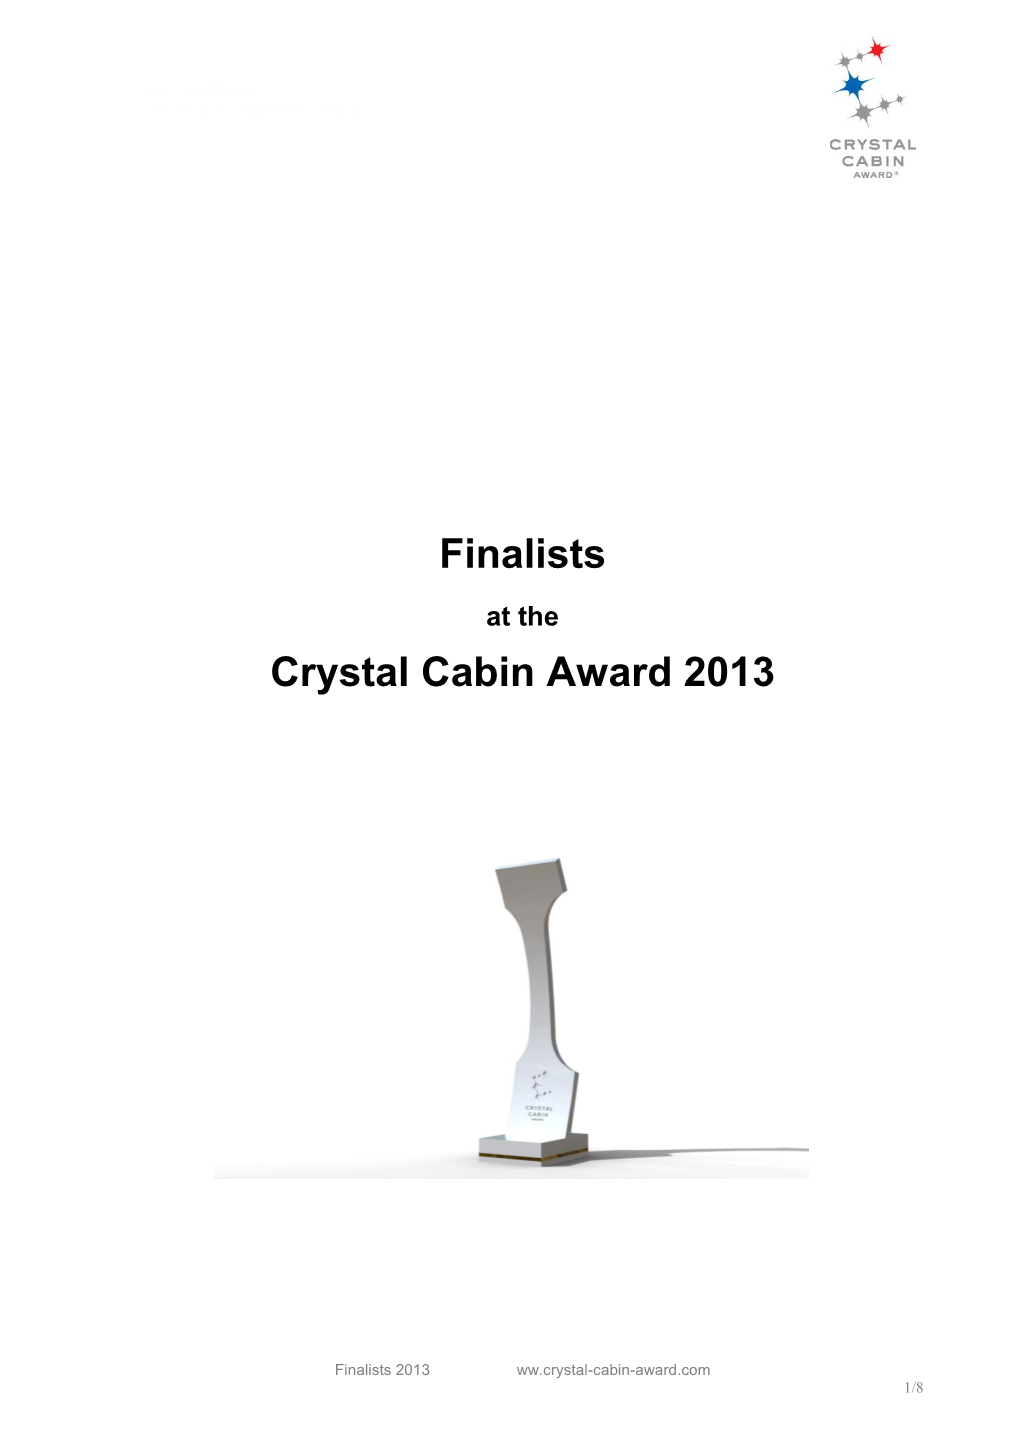 Finalists Crystal Cabin Award 2013